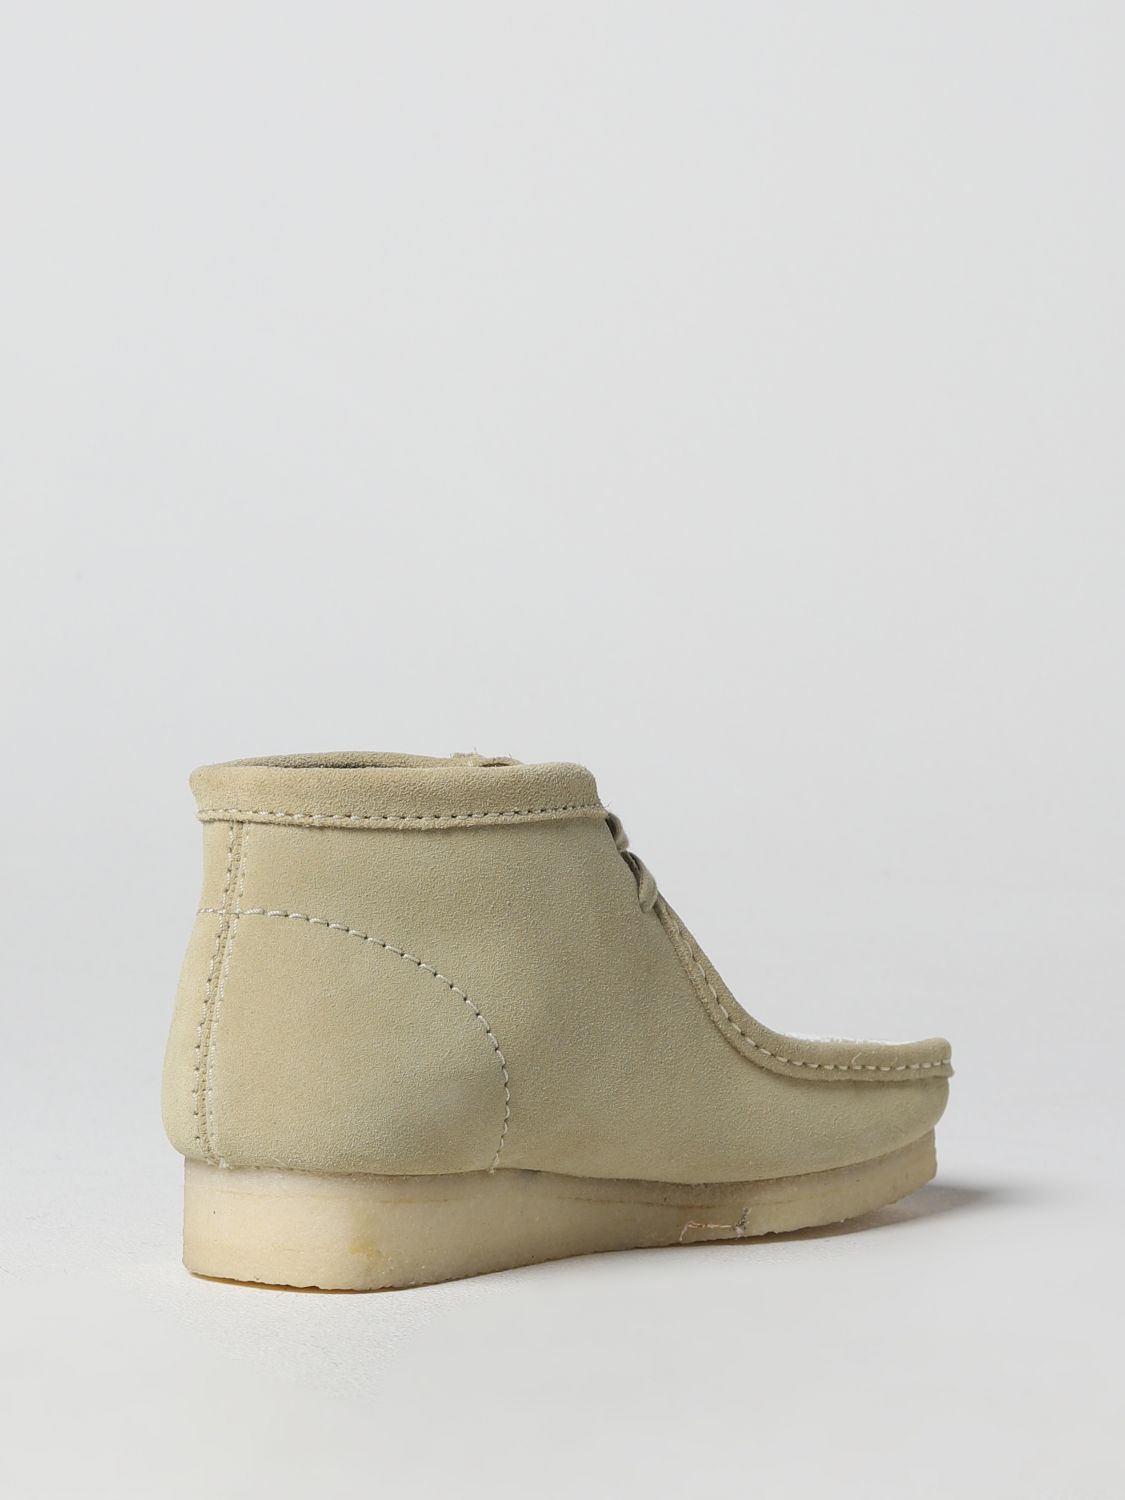 CLARKS ORIGINALS: Zapatos abotinados para hombre, Gris  Zapatos Abotinados  Clarks Originals 26174055 en línea en